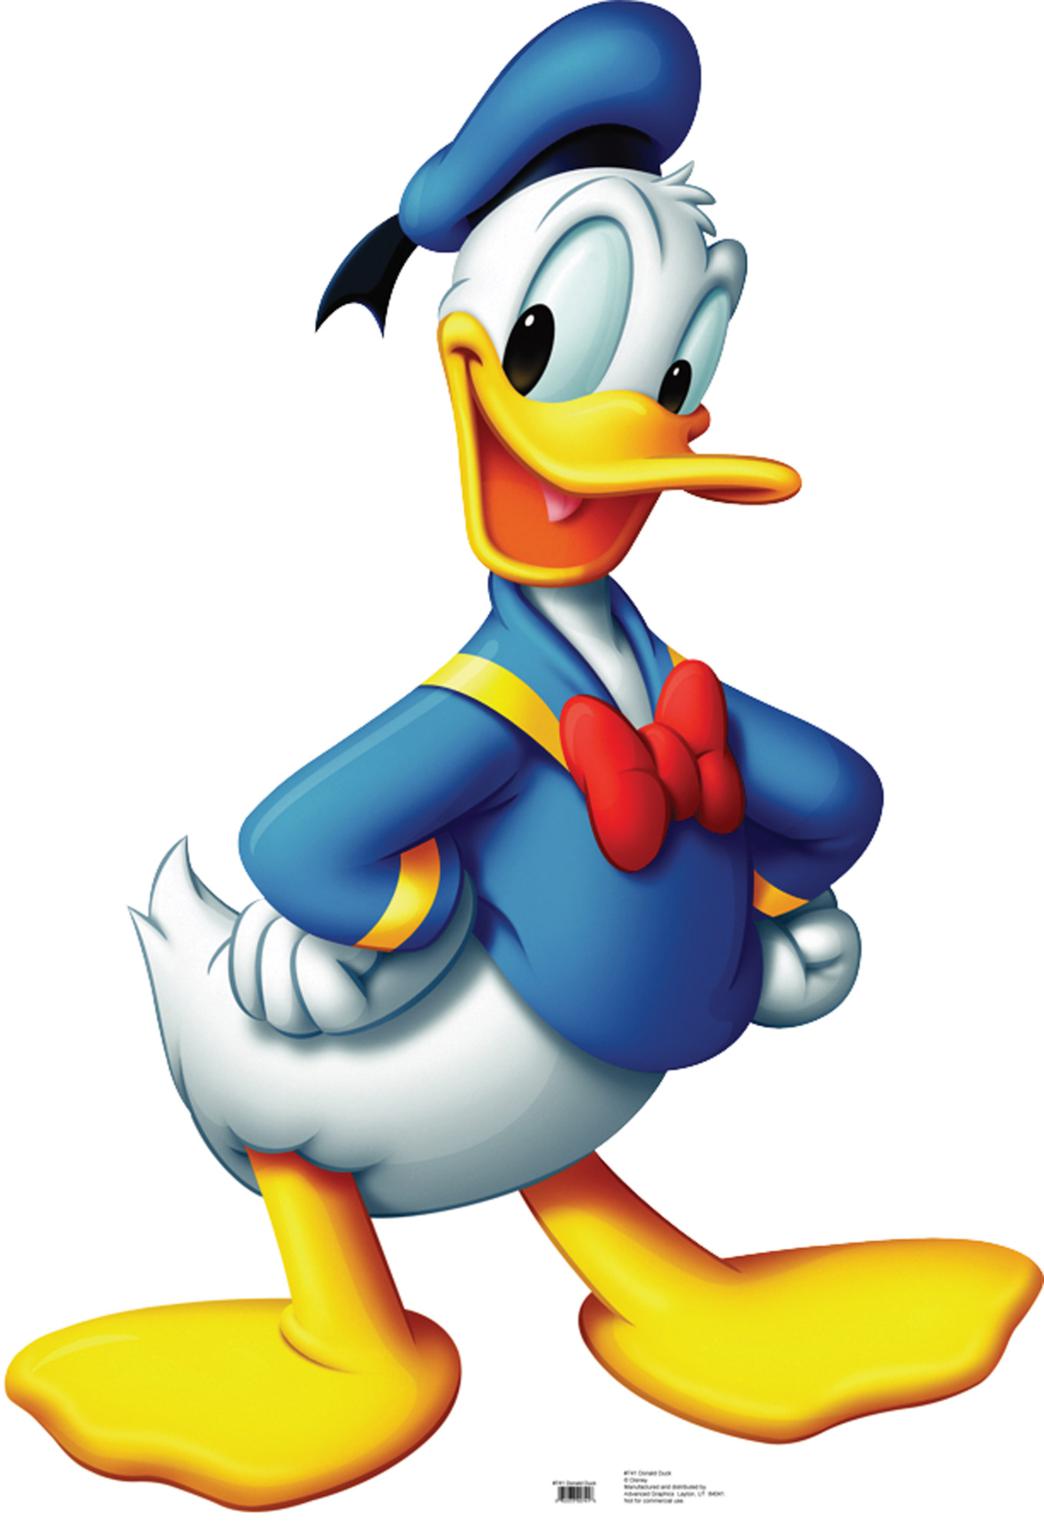 Donald Duck HD Wallpapers - Top Free Donald Duck HD Backgrounds -  WallpaperAccess